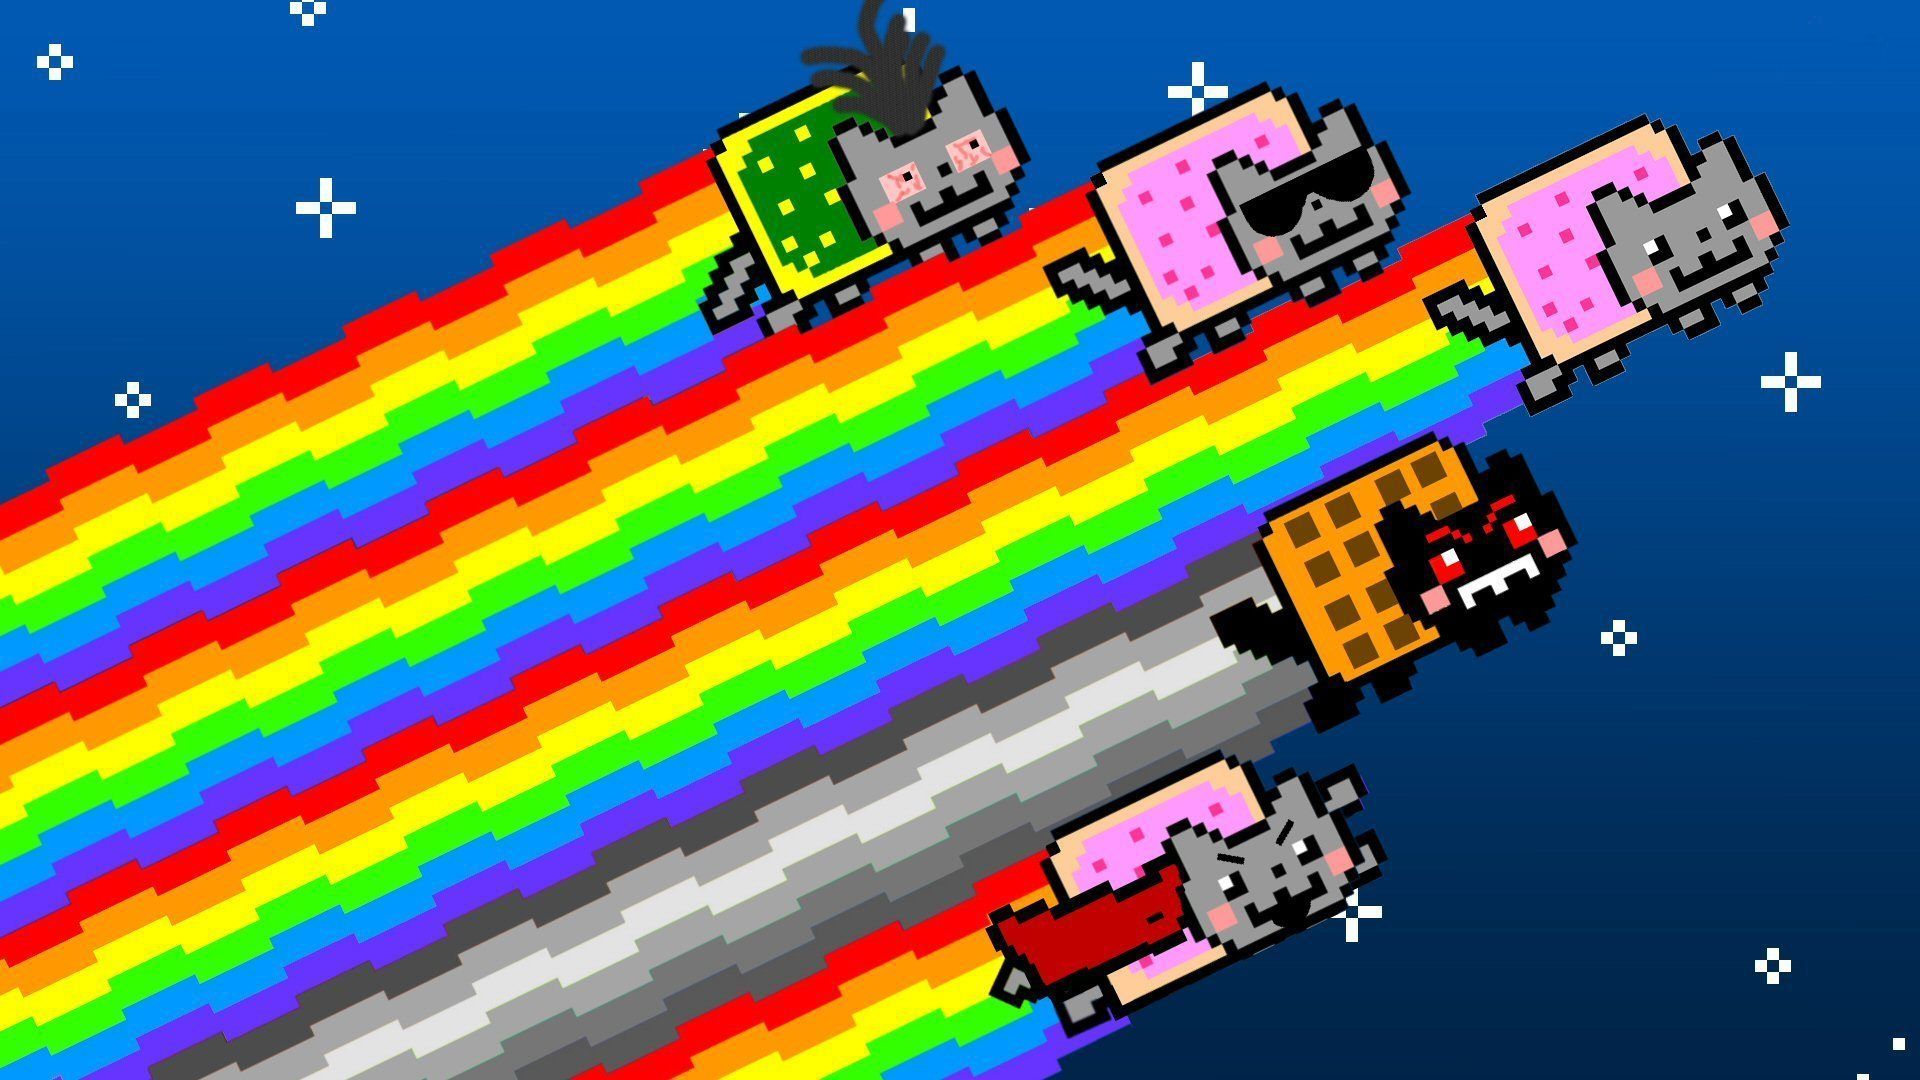 Download Meme Wallpaper 2020 Laptop. PNG & GIF BASE. Nyan cat, Cat wallpaper, Cat and dog photo